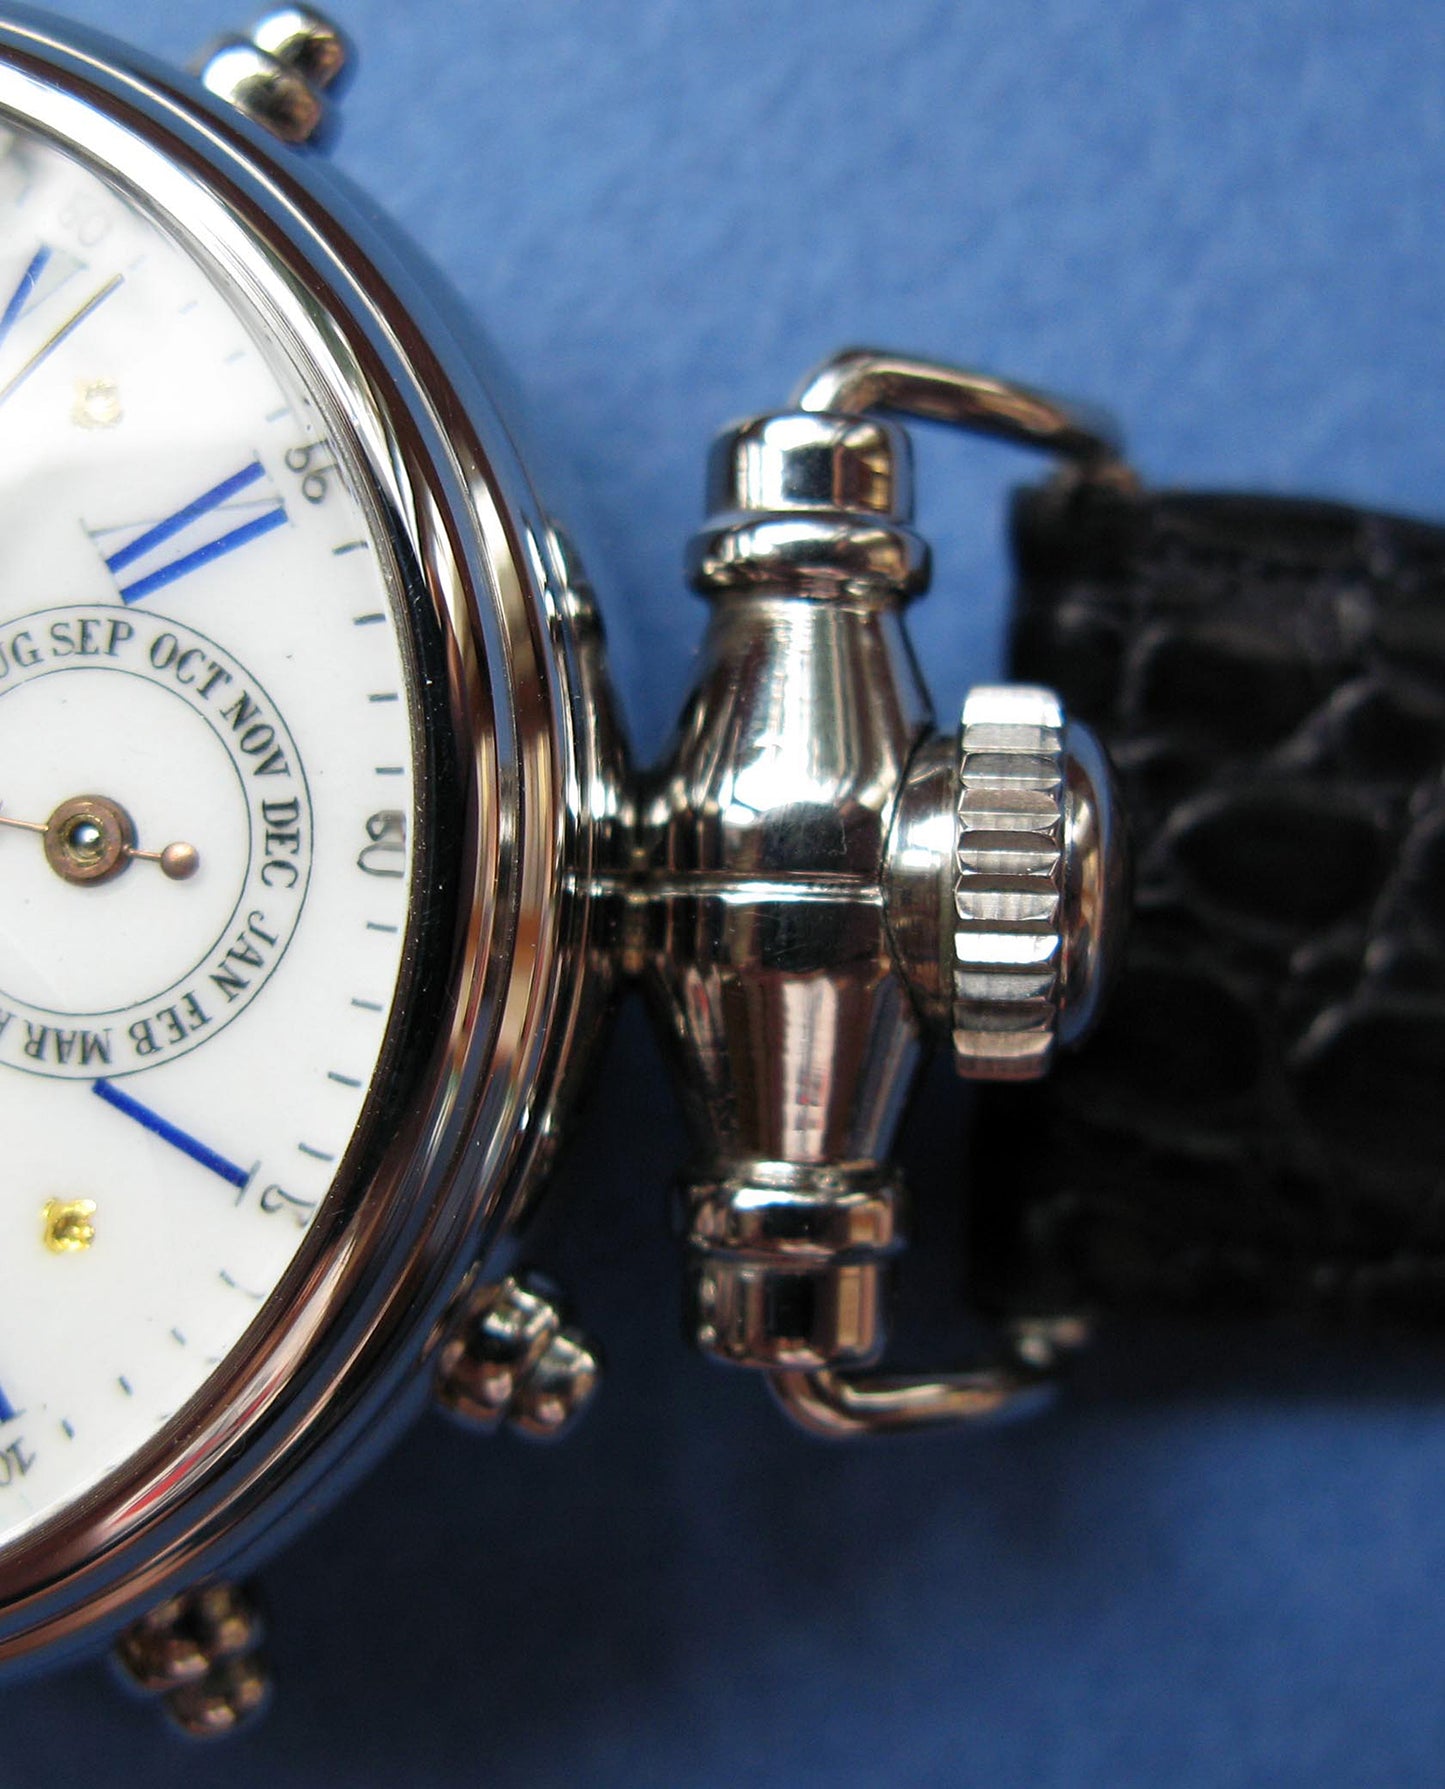 Antique Vacheron Constantin Perpetual Moon Phase exquisite watch.